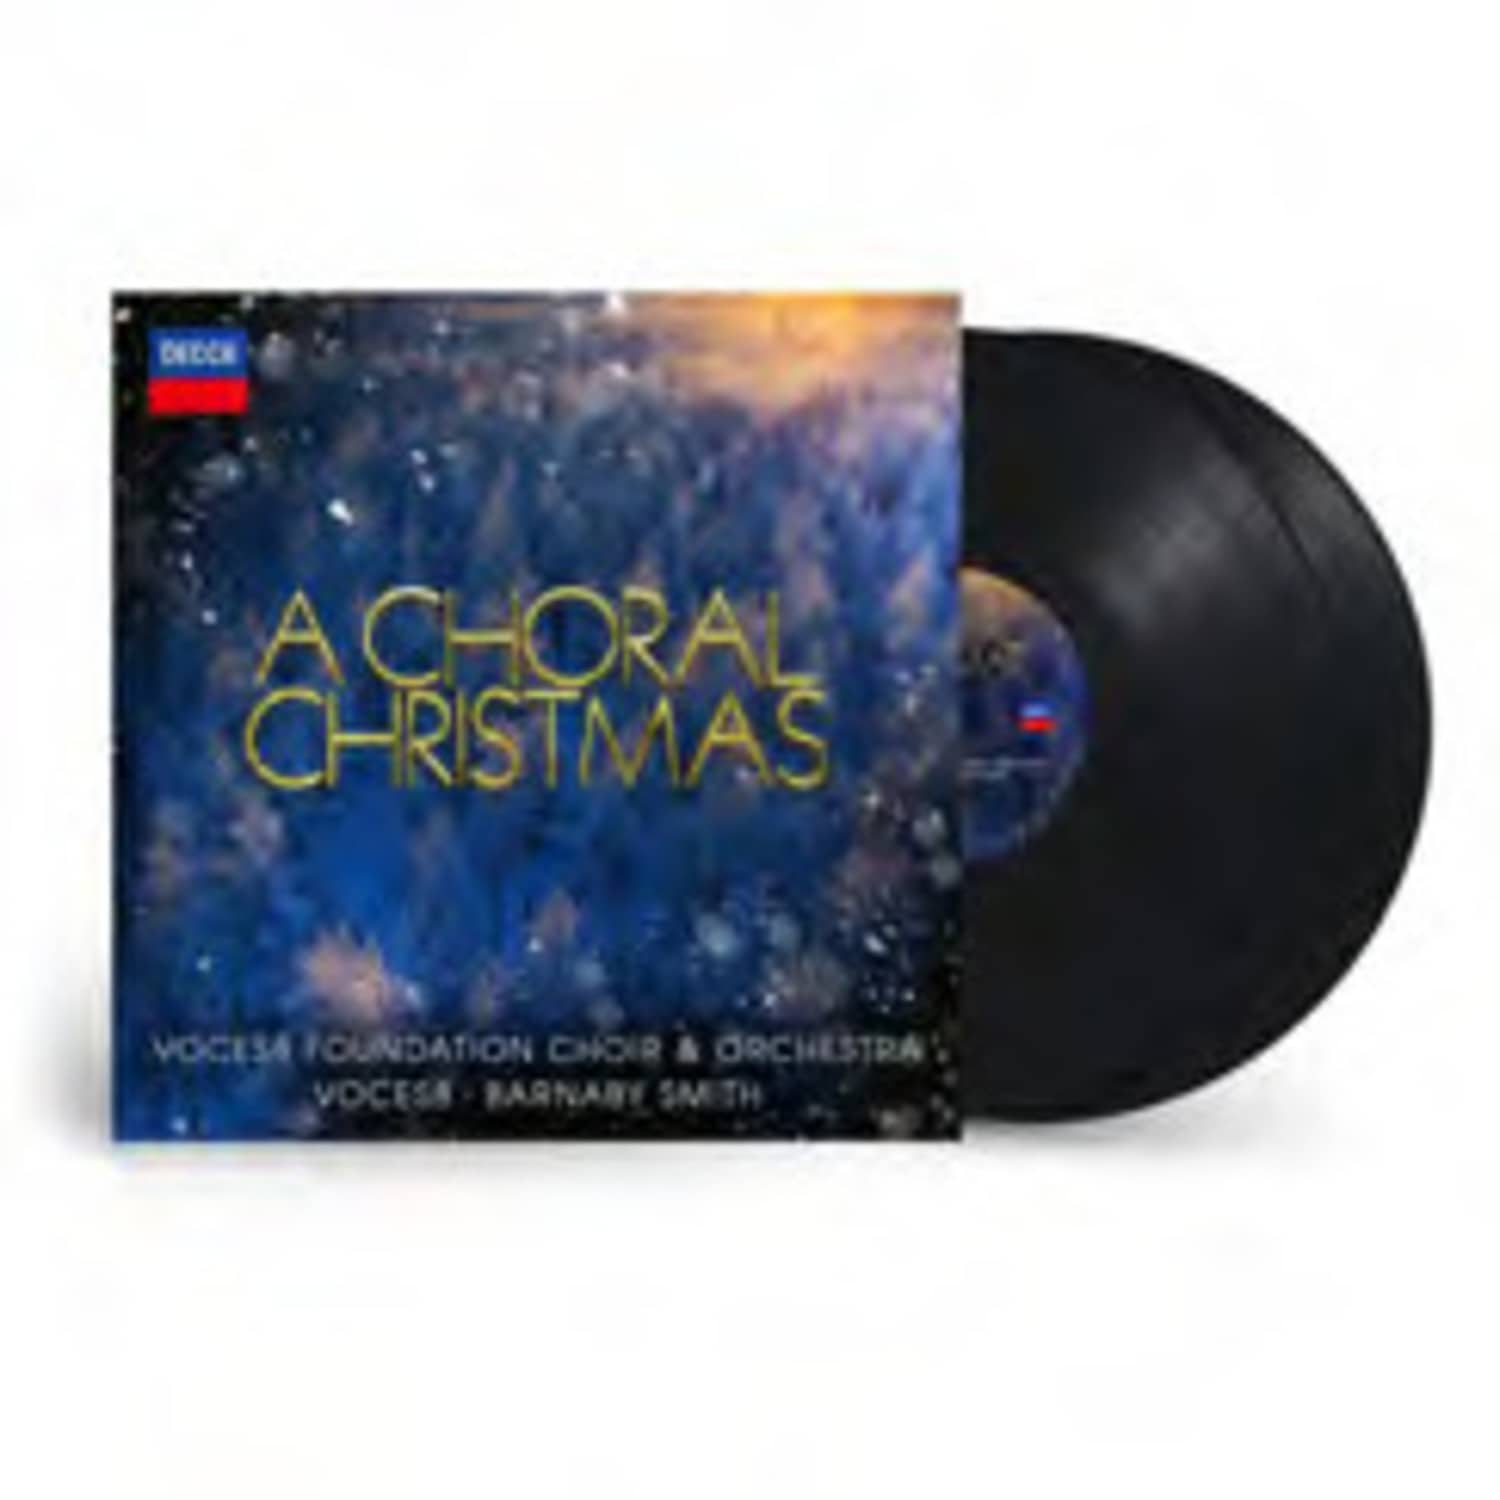 Voces8 - A CHORAL CHRISTMAS 